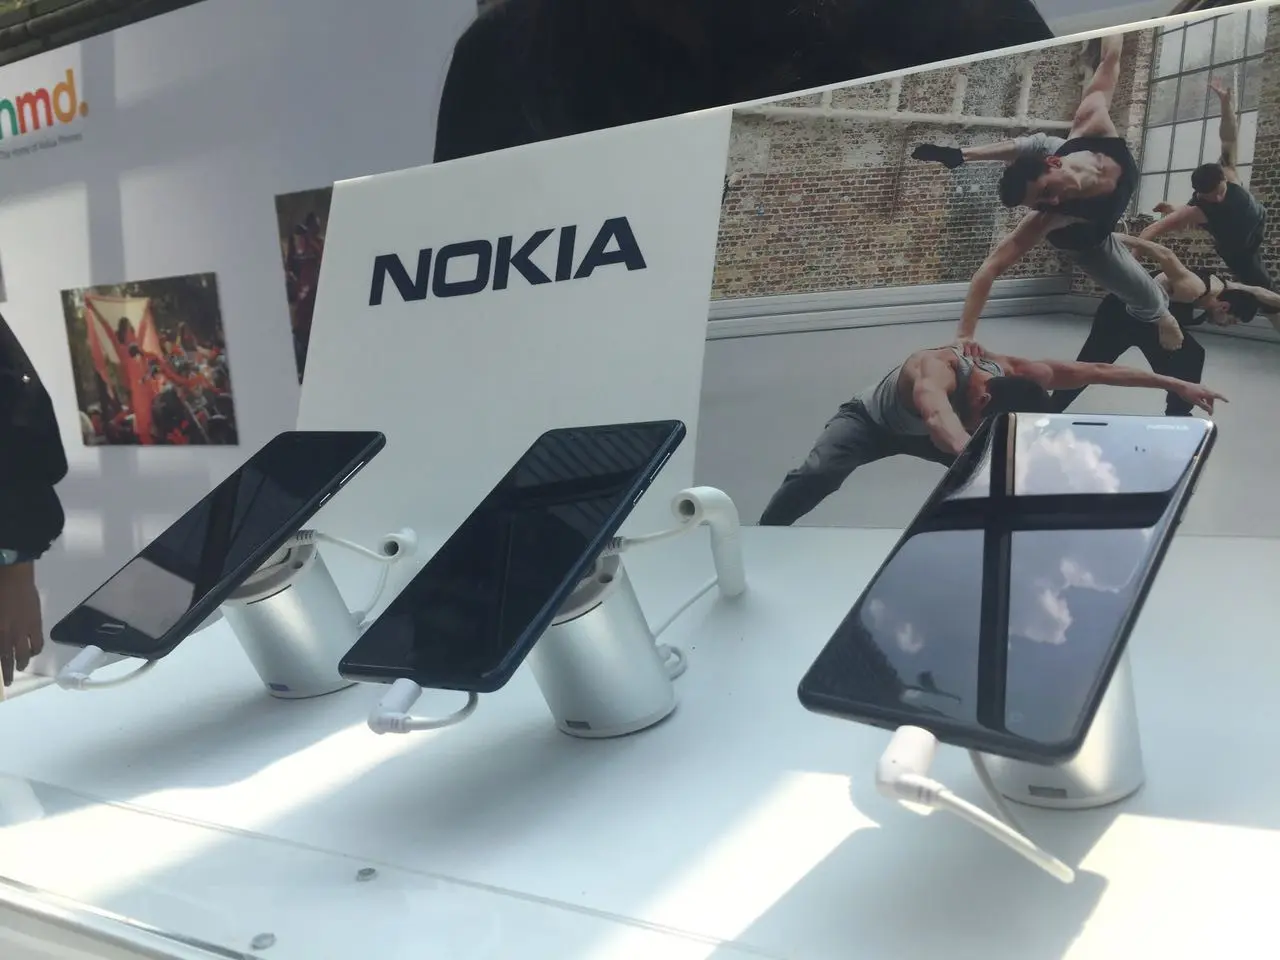 Deretan smartphone terbaru Nokia, yakni Nokia 3, 5, dan 6. (Liputan6.com/Jeko Iqbal Reza)